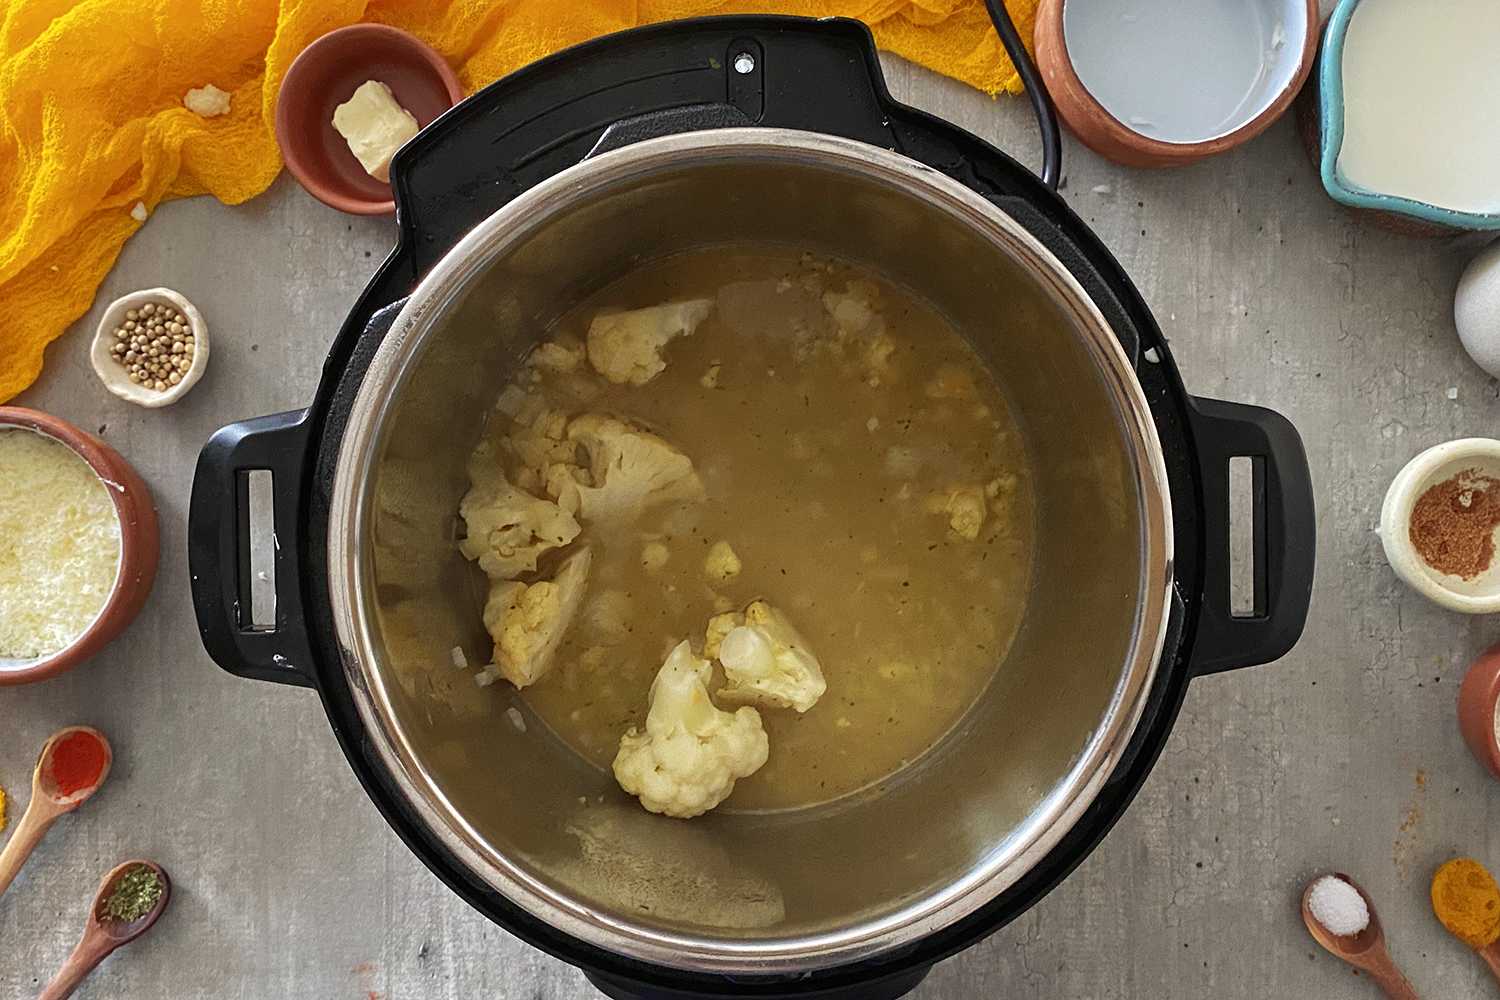 Instant Pot Cauliflower Cheese Soup